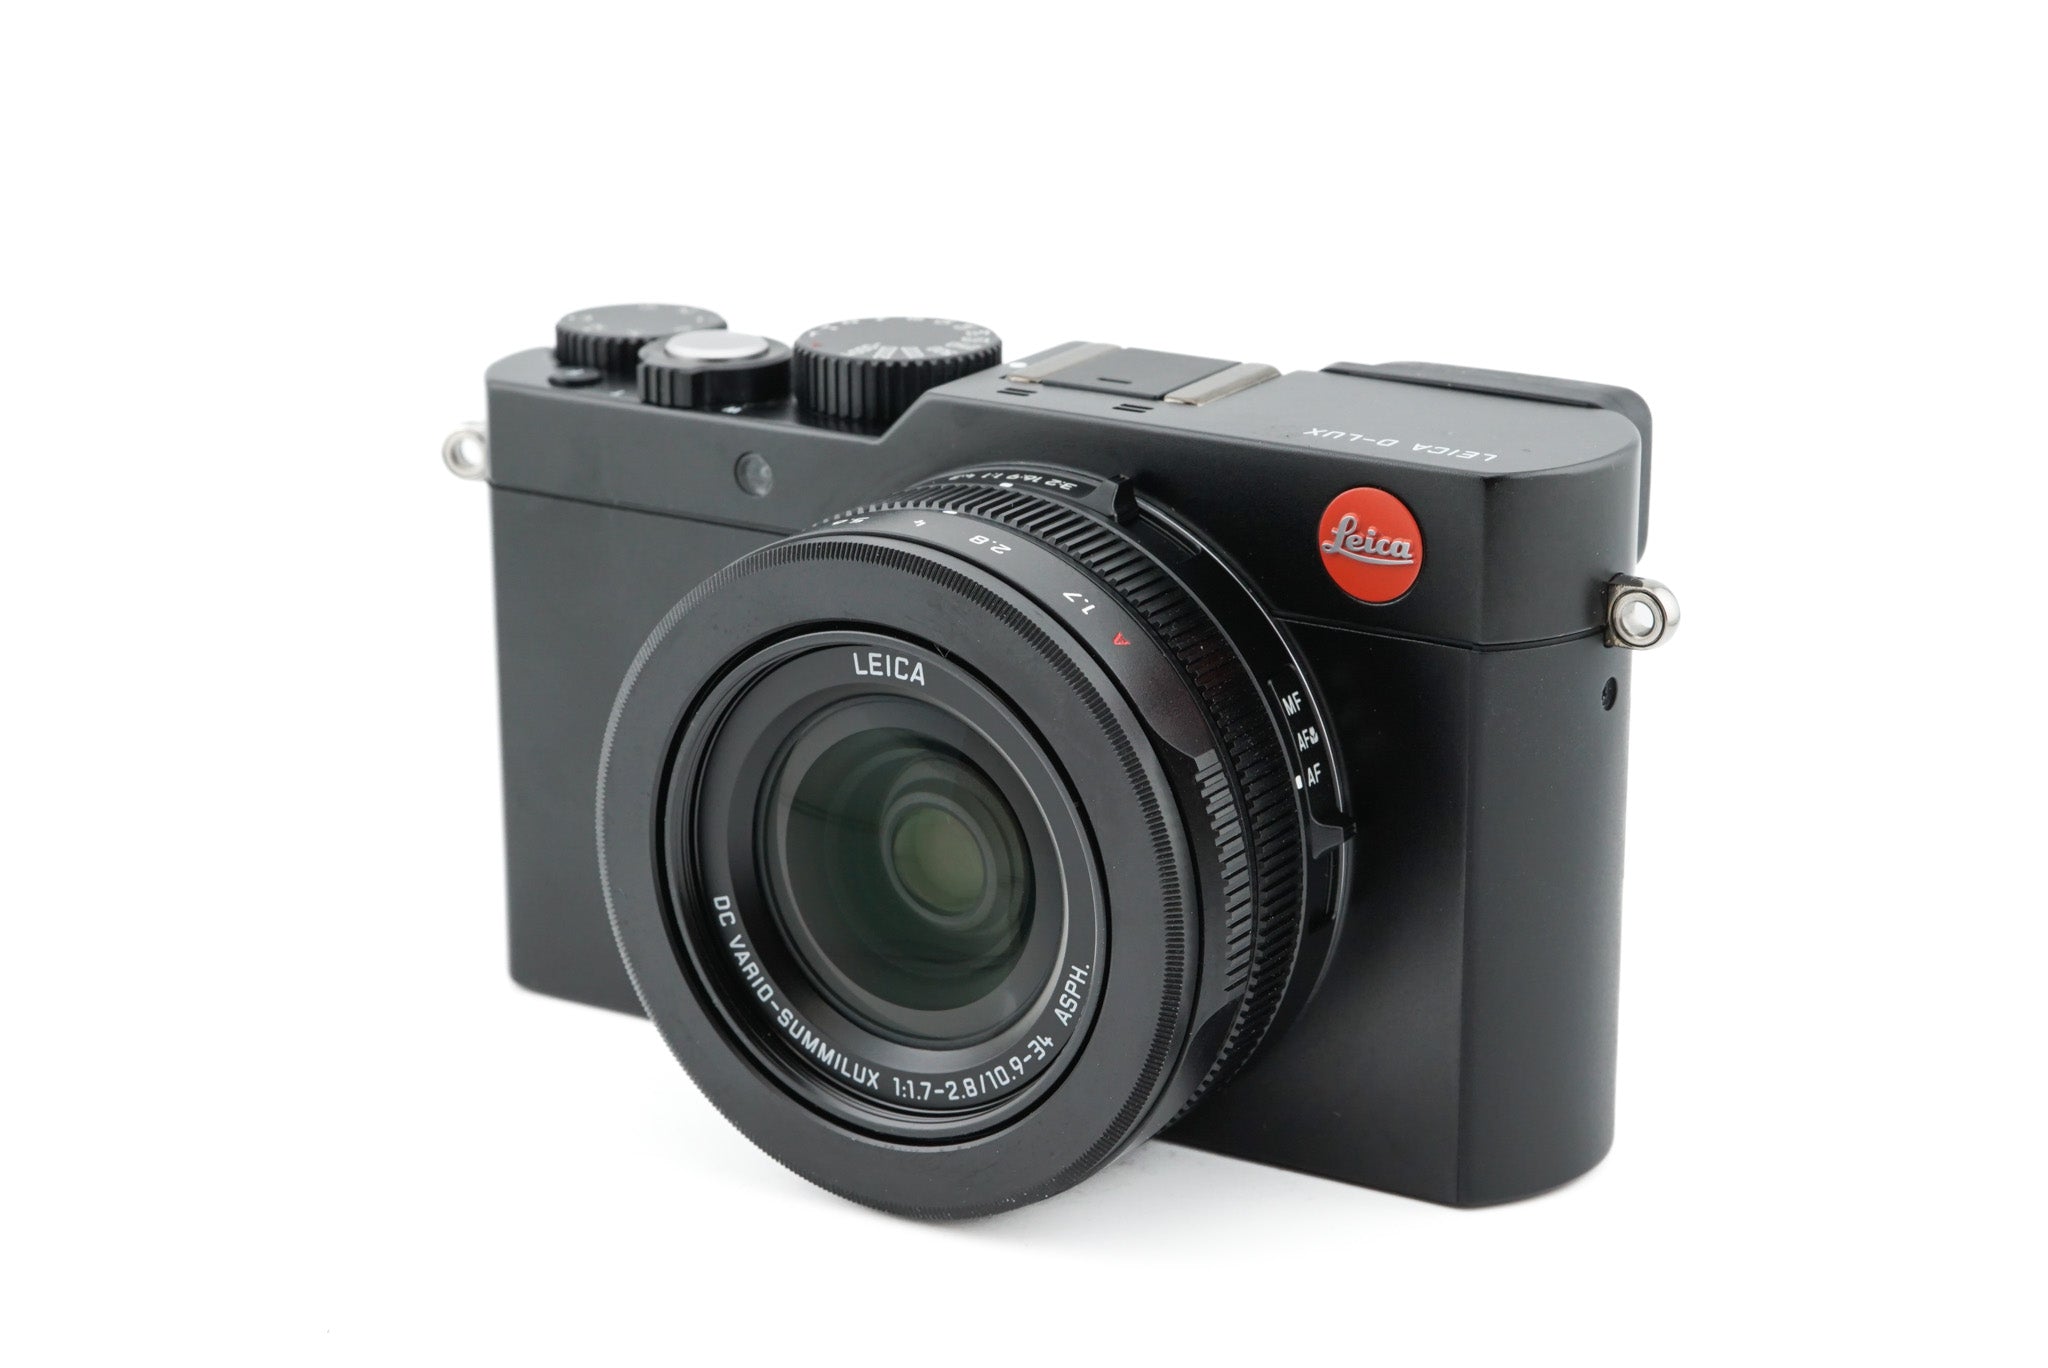  Leica D-Lux (Type 109) 12.8 Megapixel Digital Camera